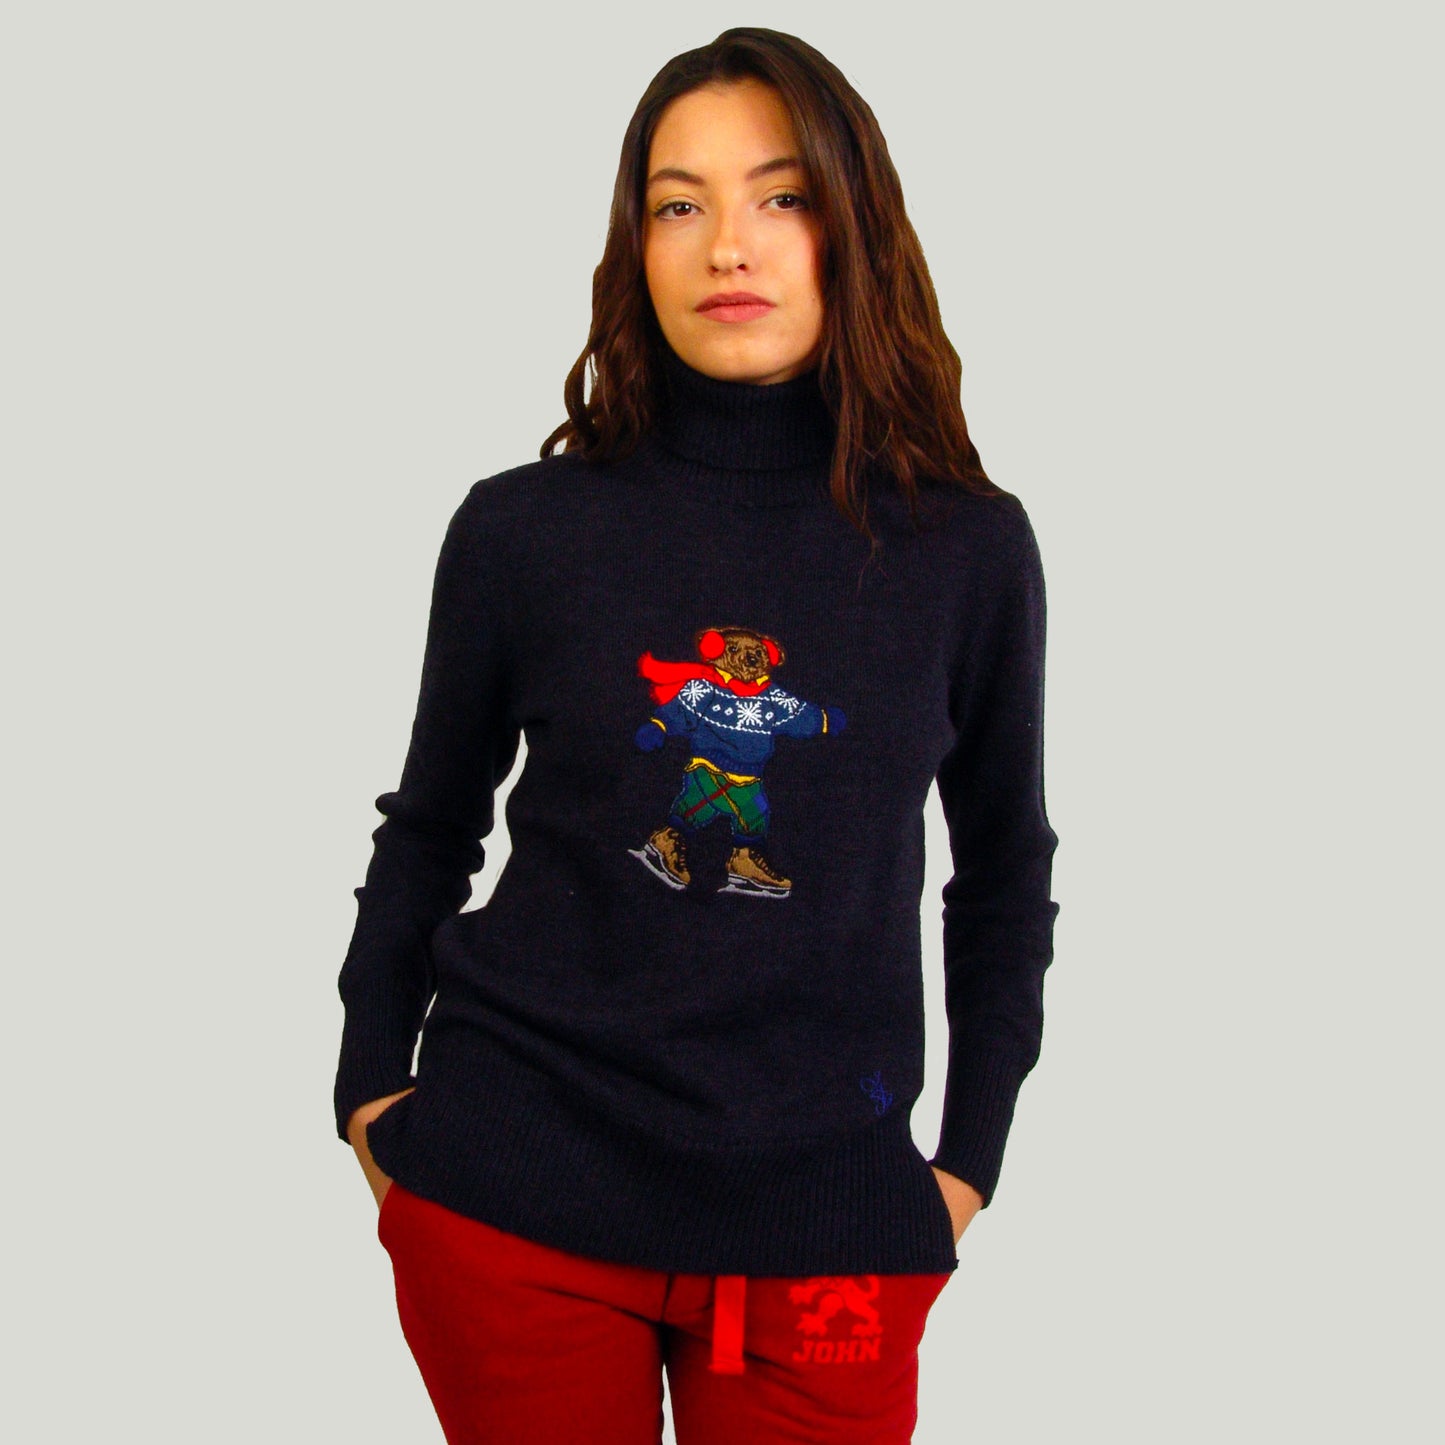 Turtleneck Teddy Bear Sweater for Woman